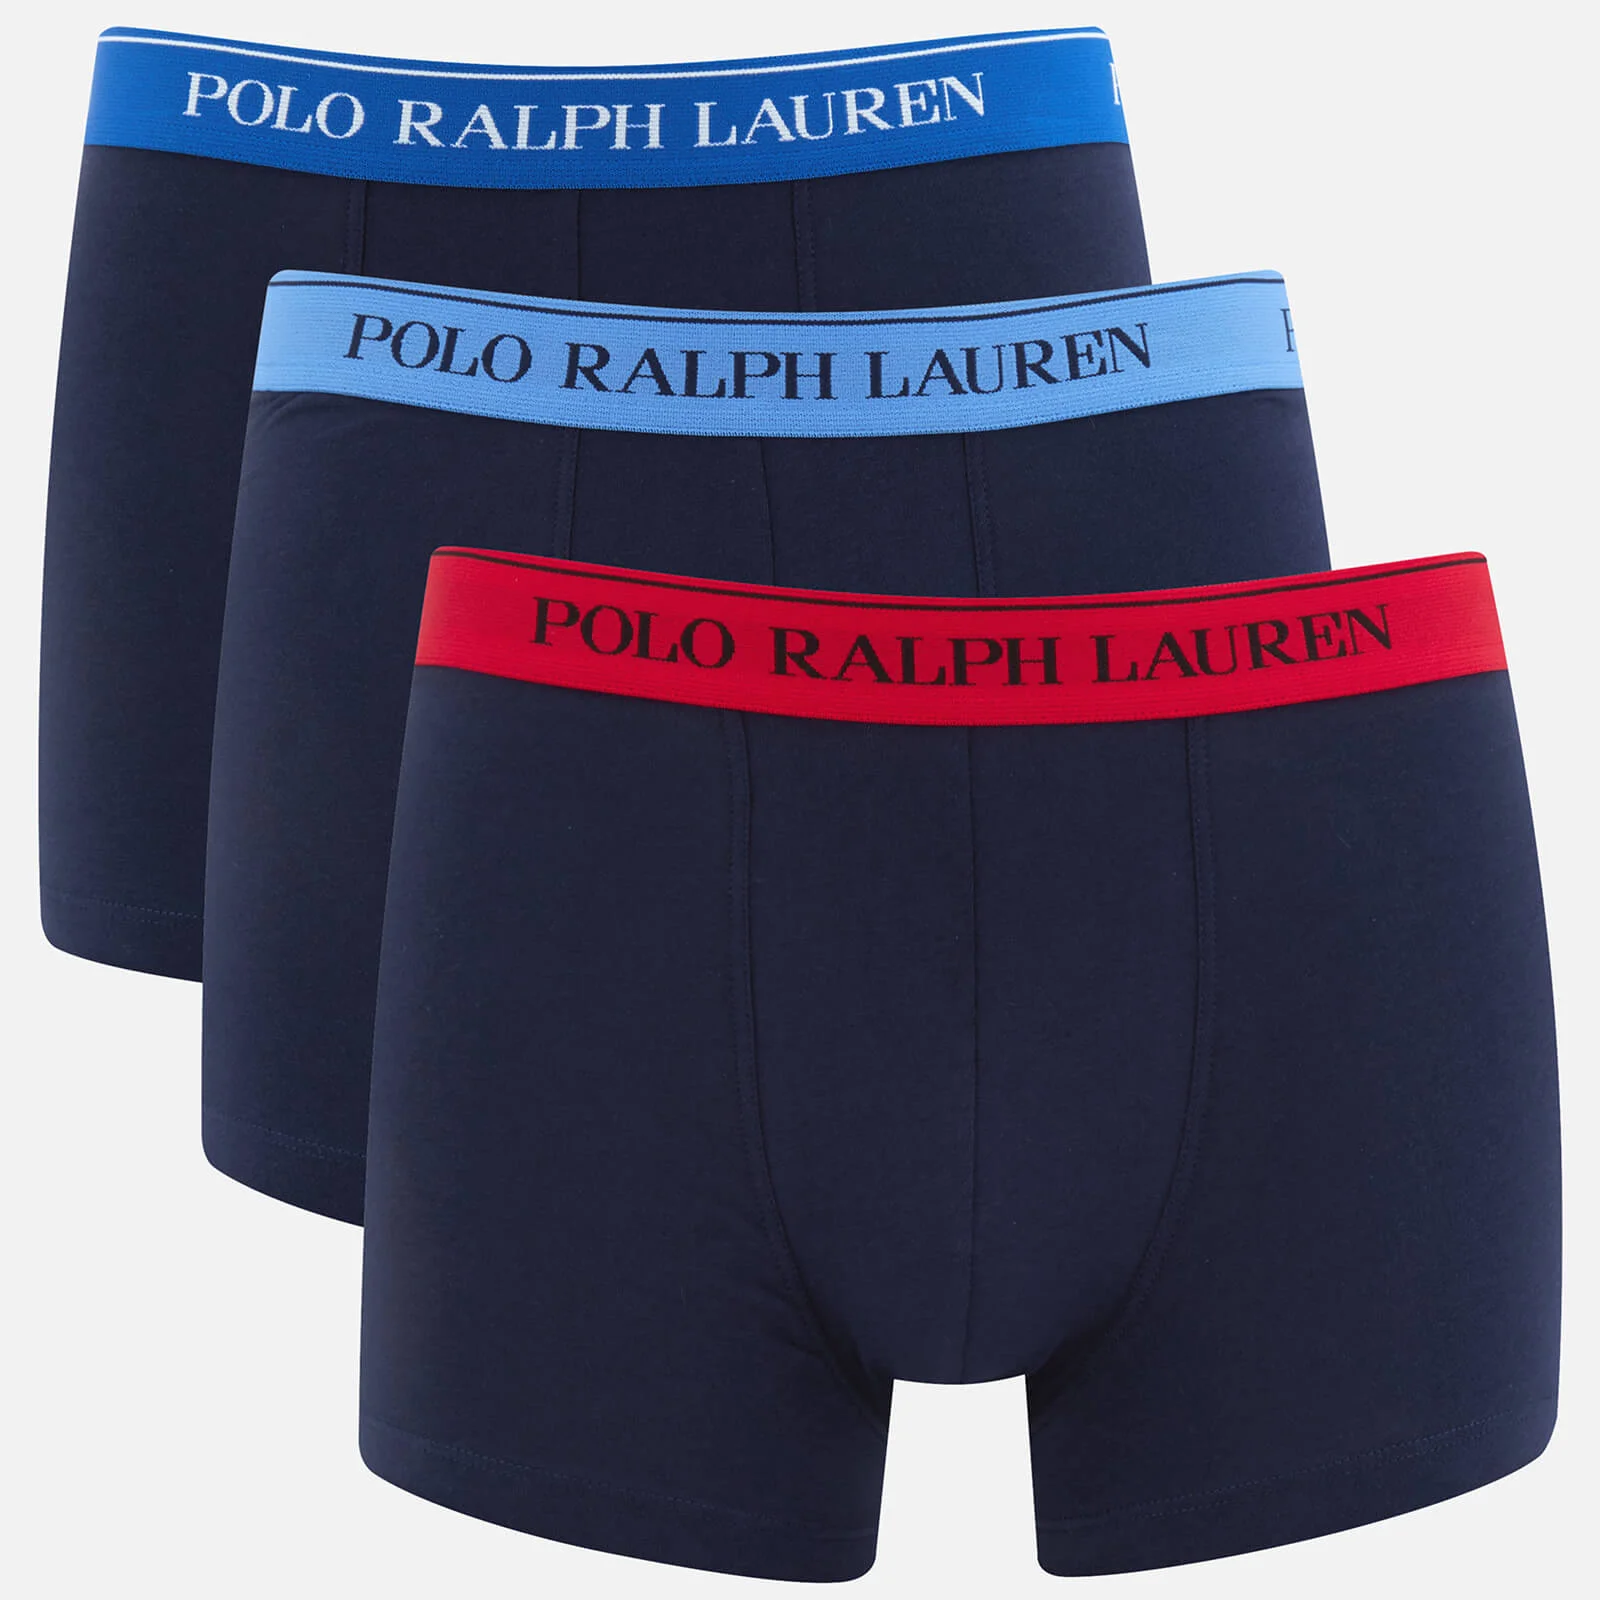 Polo Ralph Lauren Men's 3 Pack Classic Trunk Boxer Shorts - Navy/Sapphire/Blue/Red Image 1